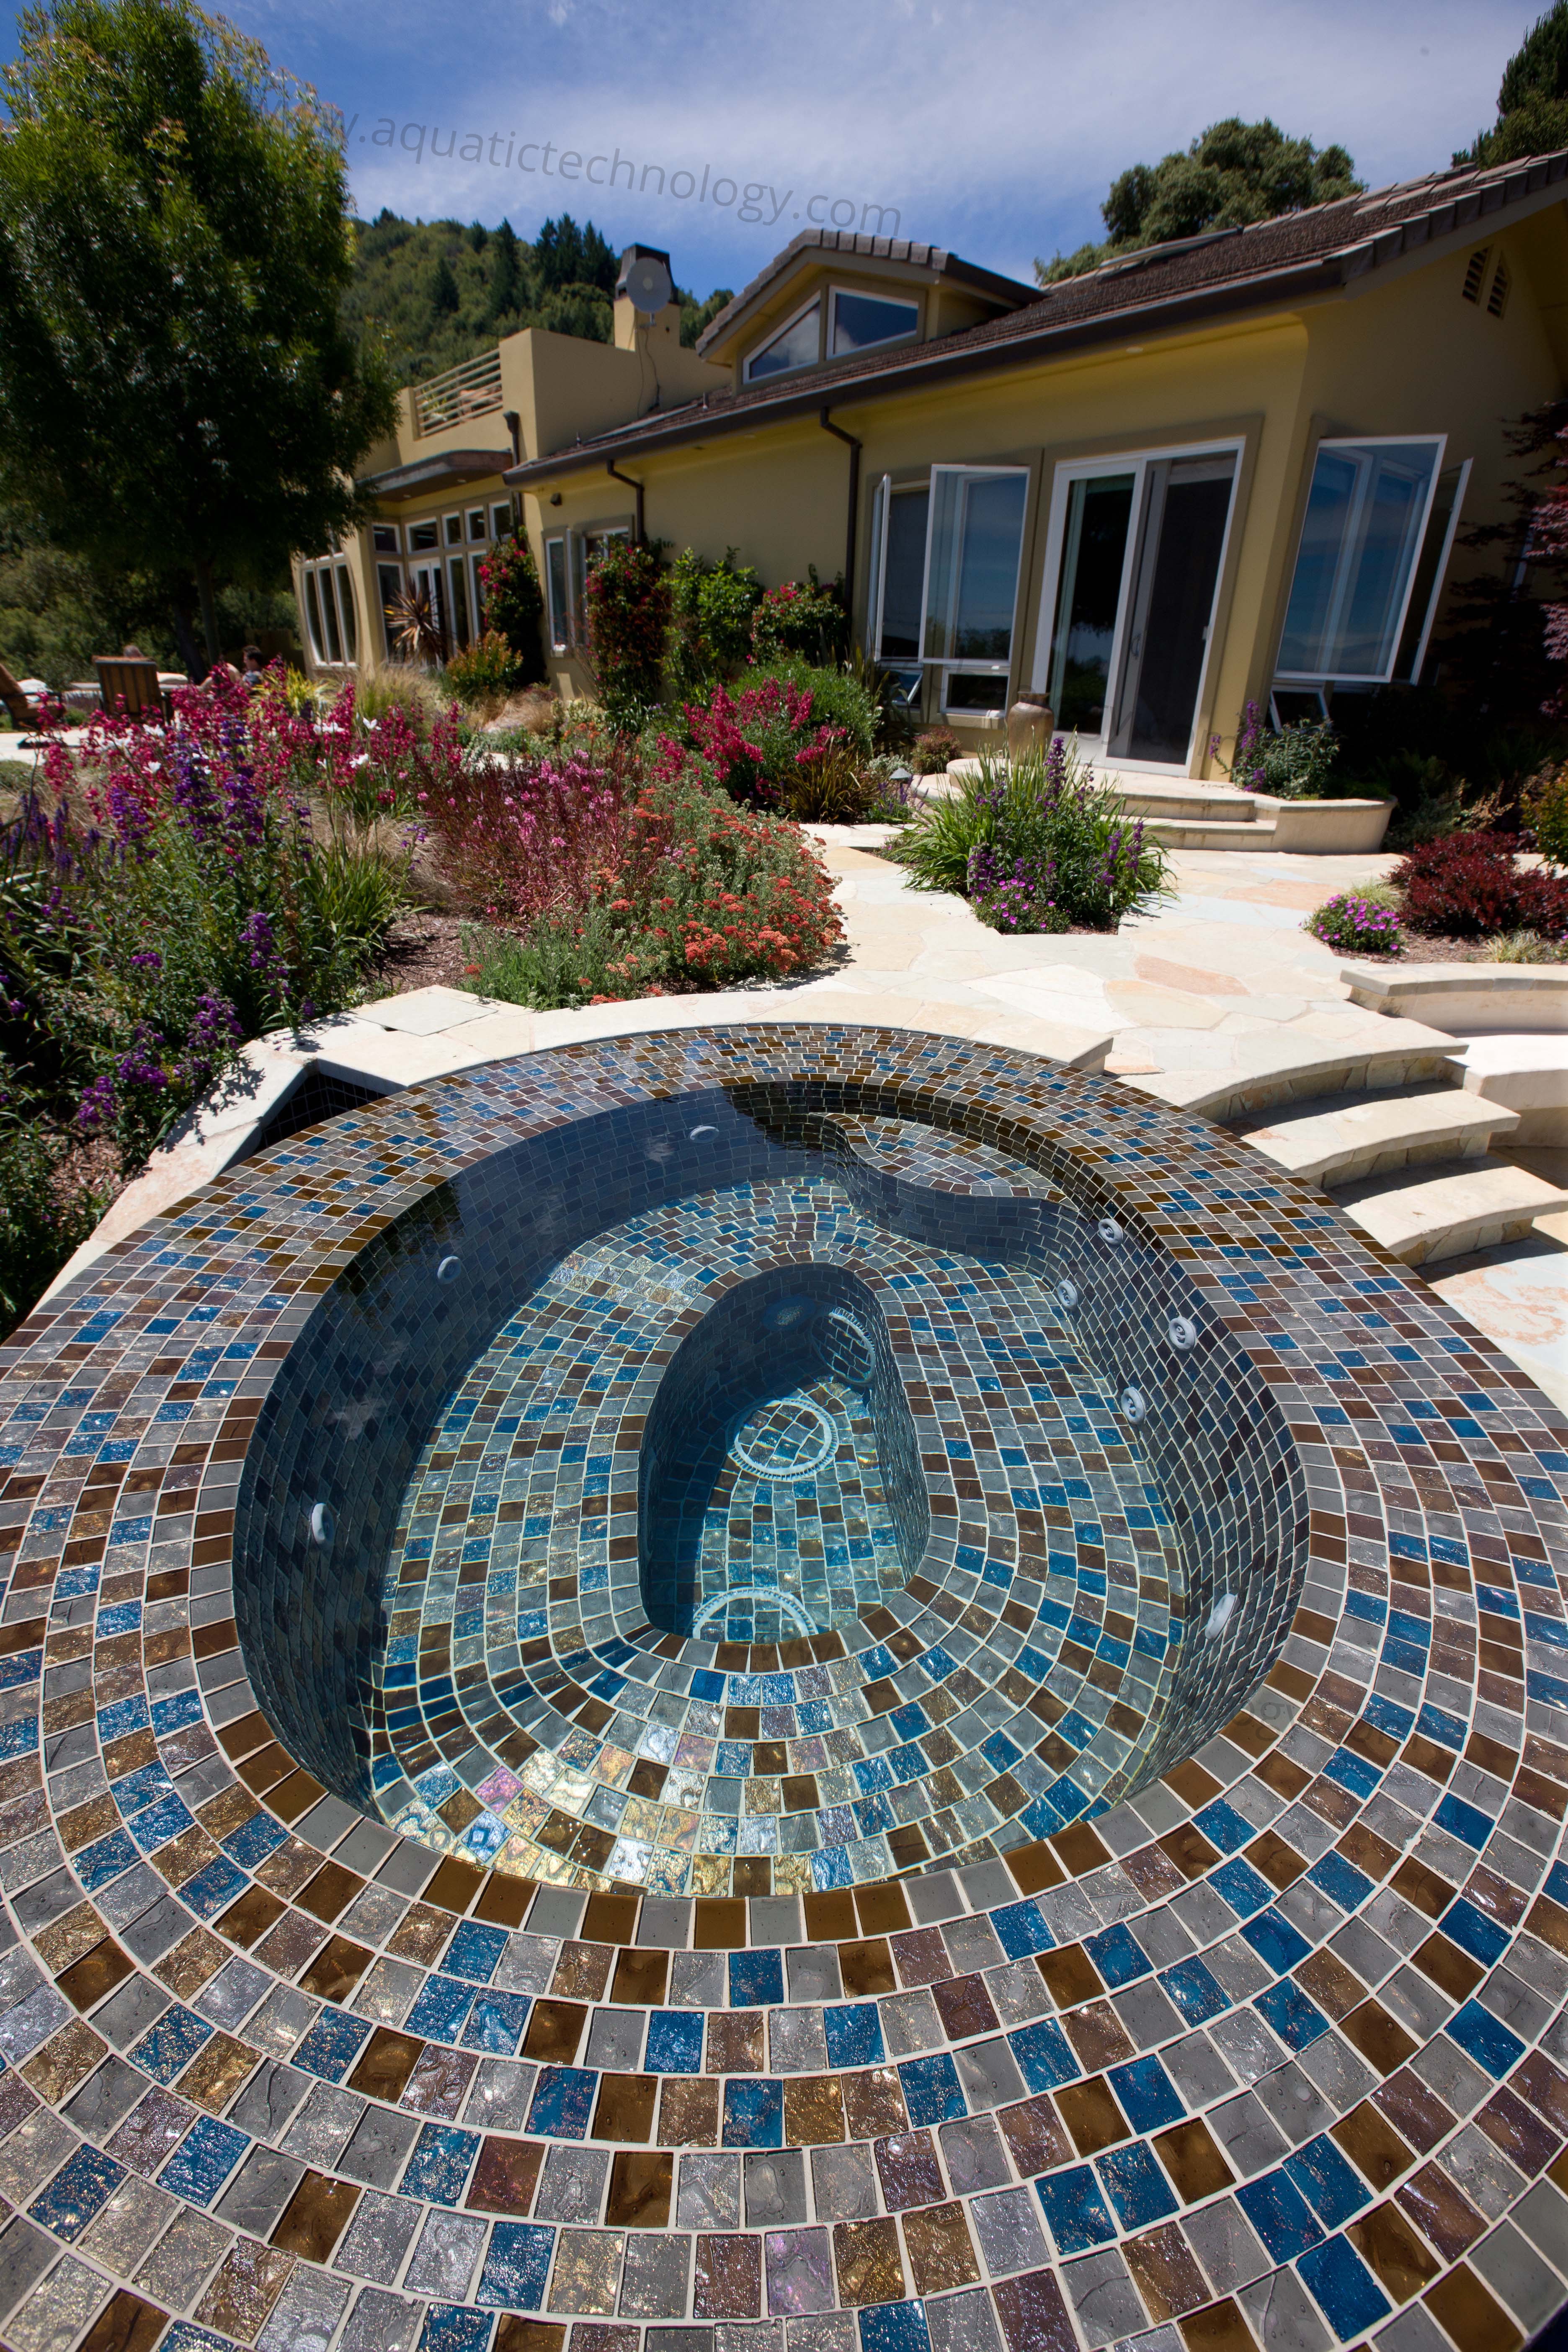 Flooded edge glass tile spa